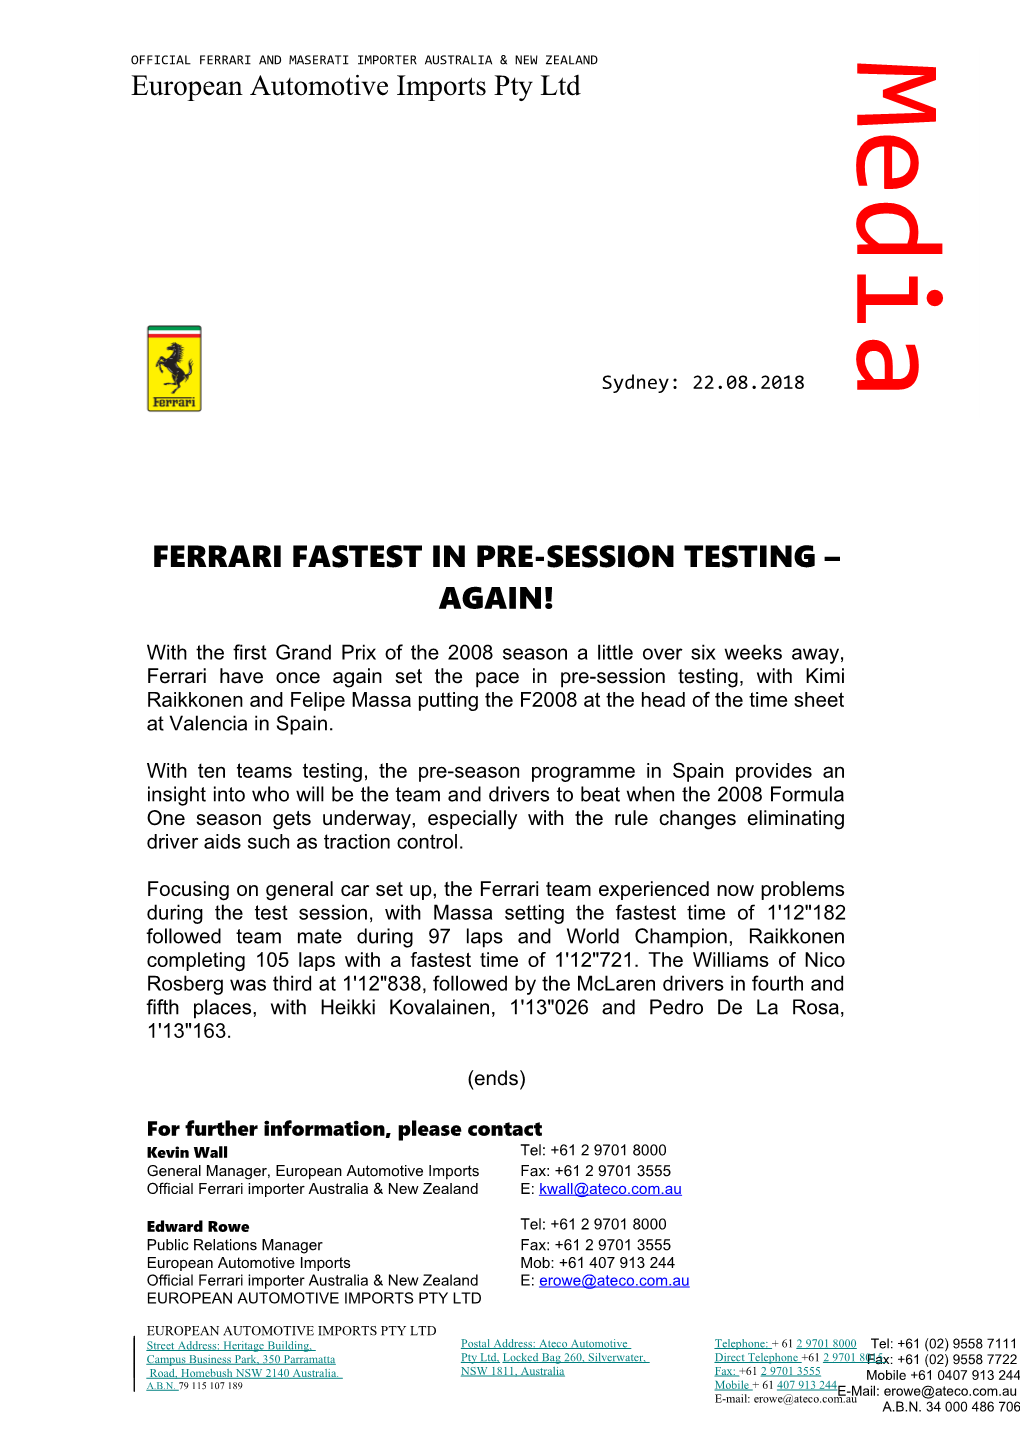 Ferrari Fastest in Pre-Session Testing Again!